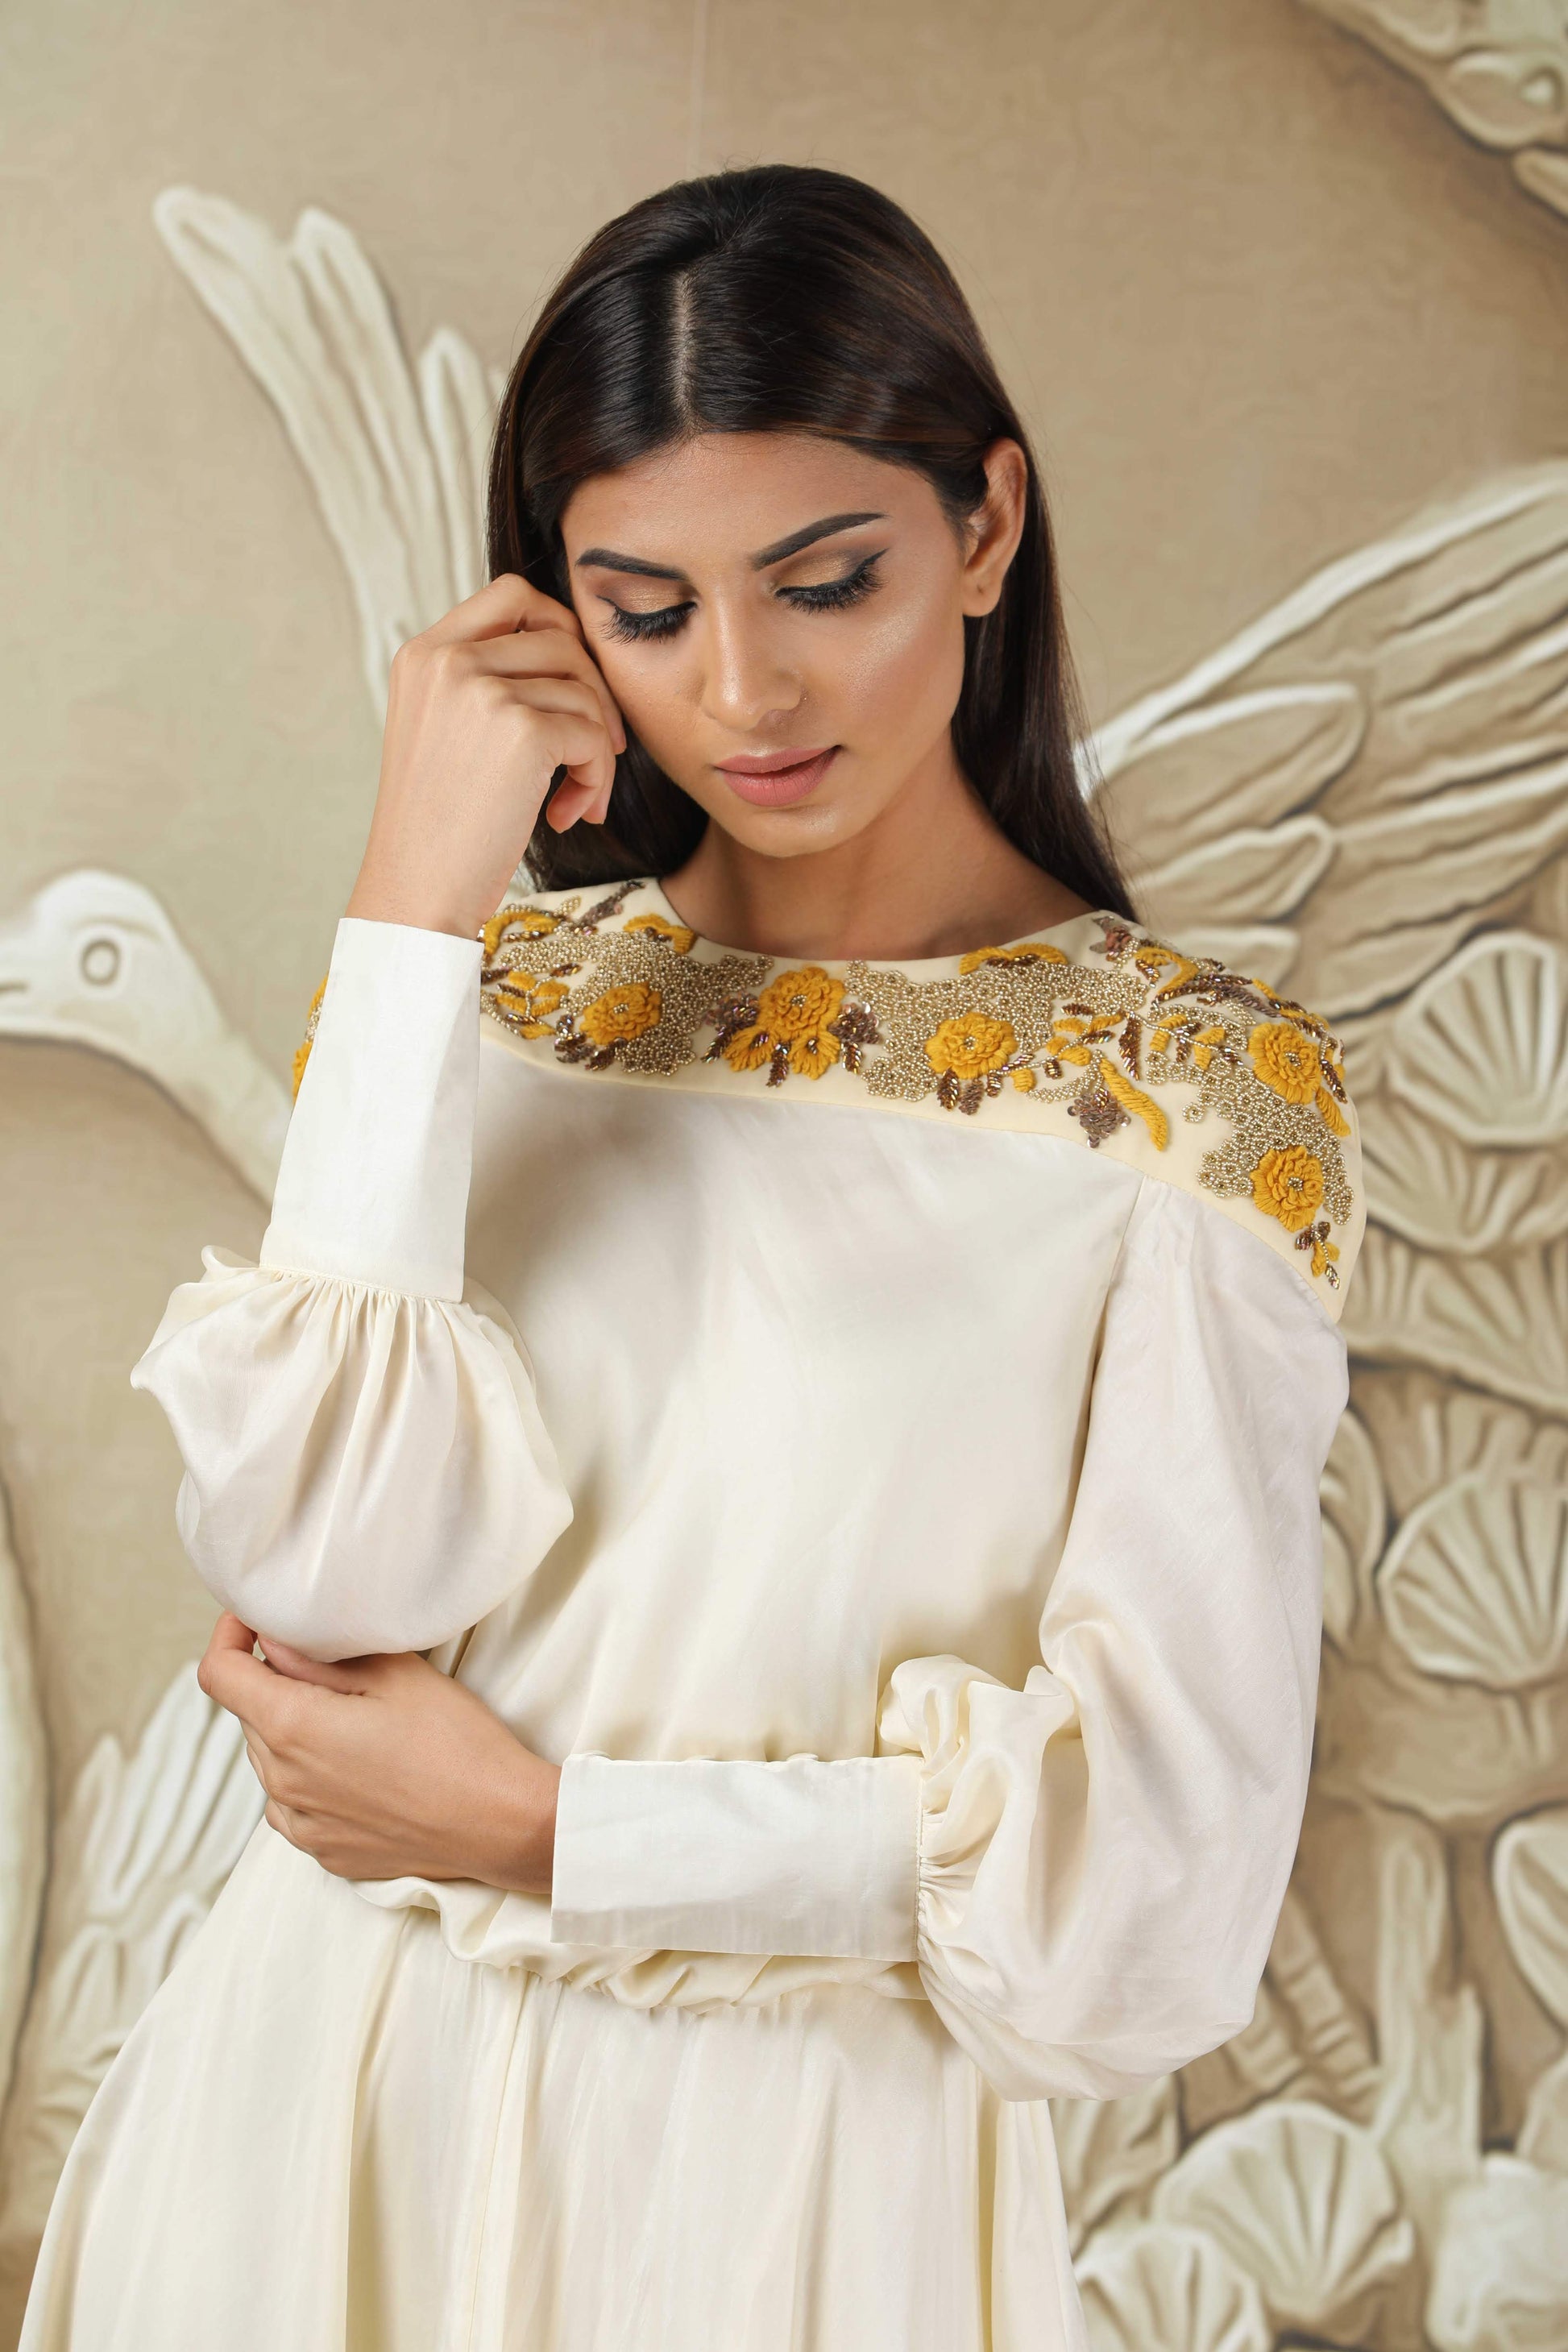 White Lotus-Full length dress - www.styletriggers.com